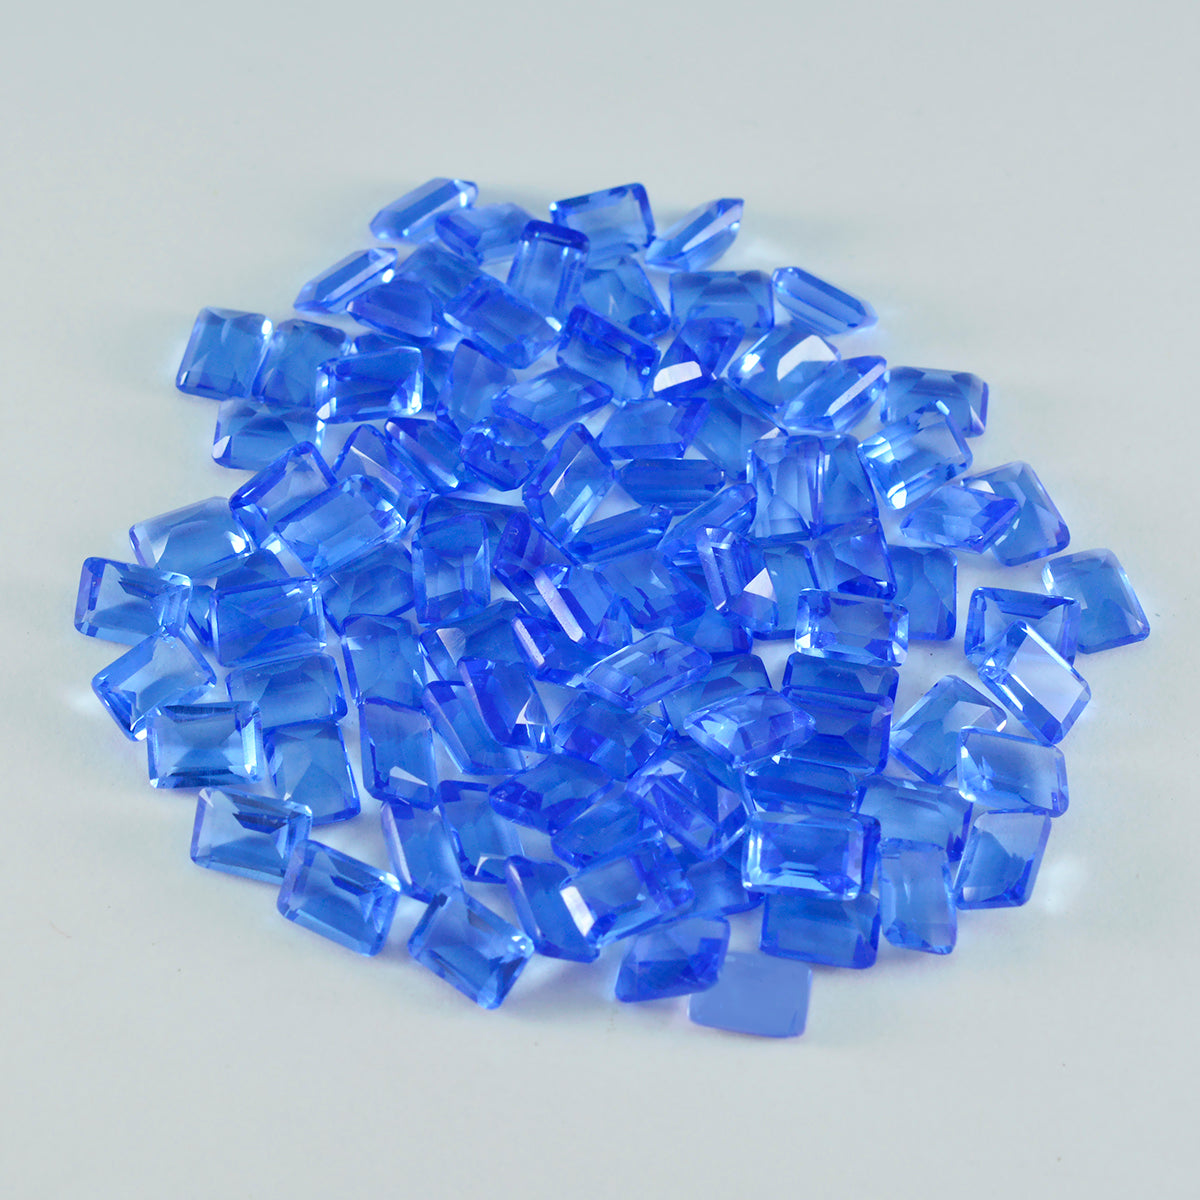 Riyogems 1PC blauwe saffier CZ gefacetteerde 3x5 mm achthoekige vorm mooie kwaliteitsedelstenen